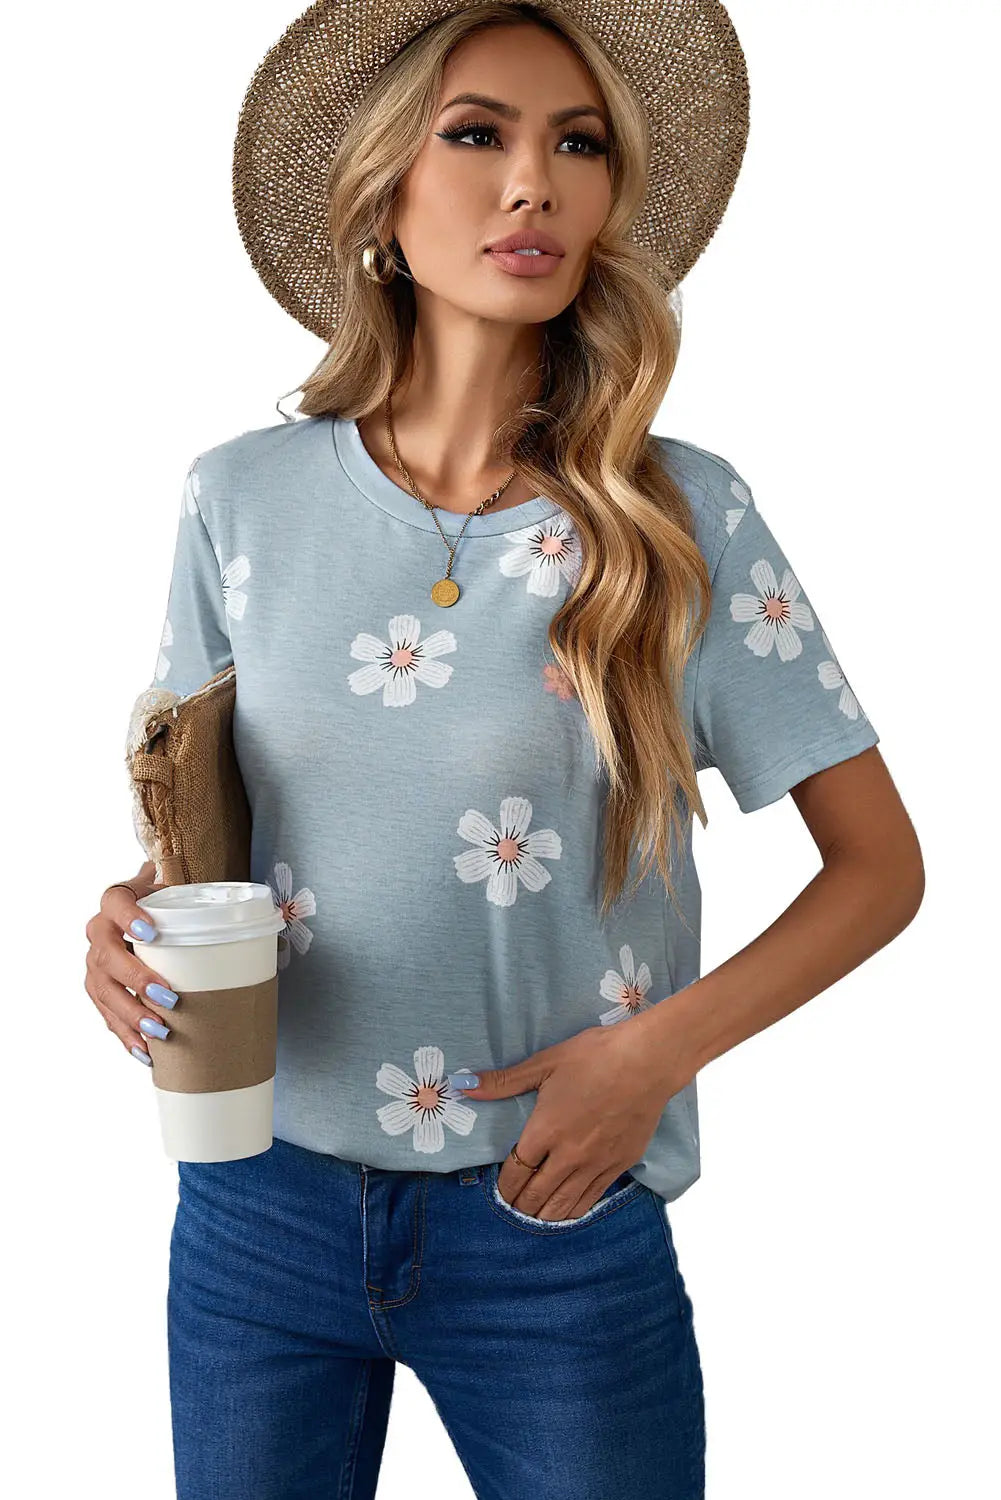 Gray floral pattern t-shirt - t-shirts